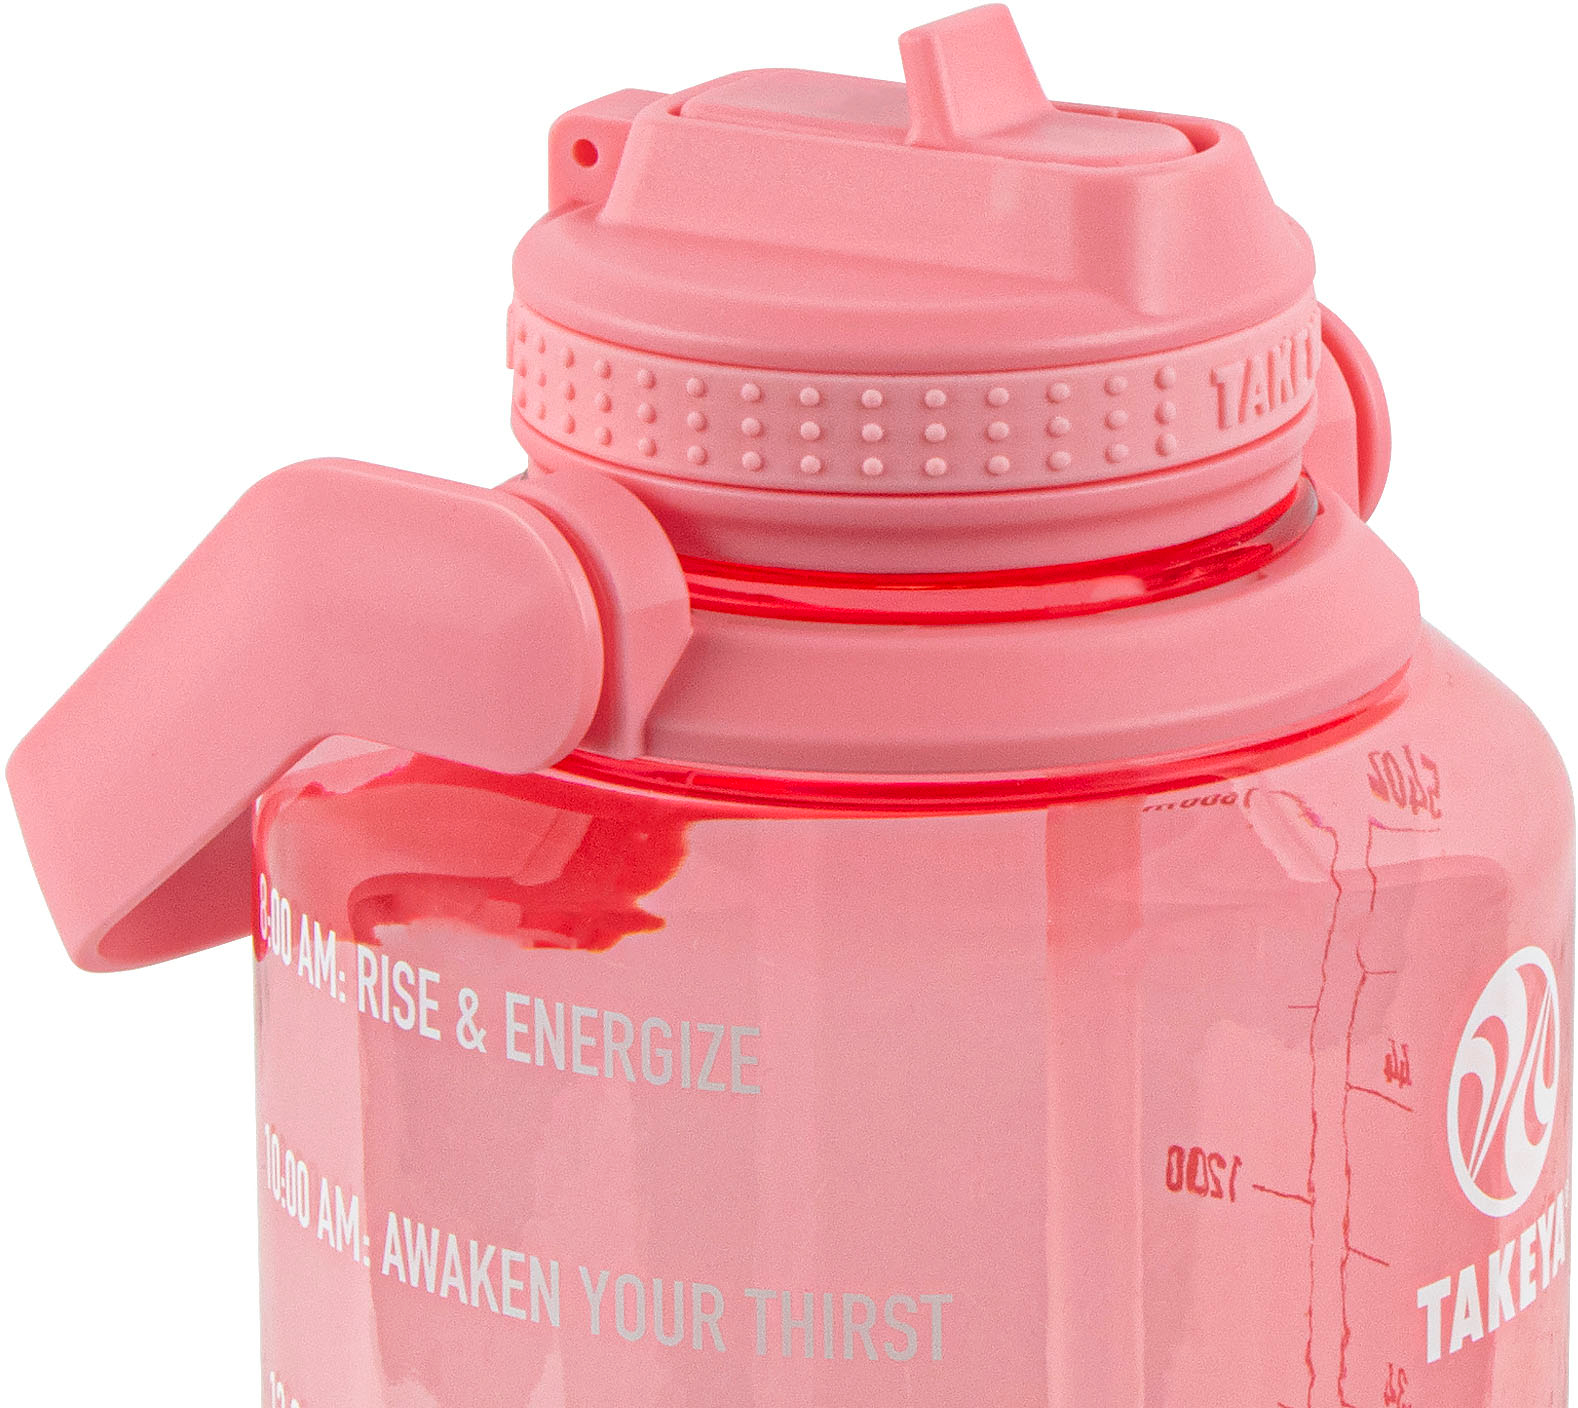 Takeya Tritan Spout Water Bottles 18 Oz Breezy BlueFlutter Pink Pack Of 2  Bottles - Office Depot